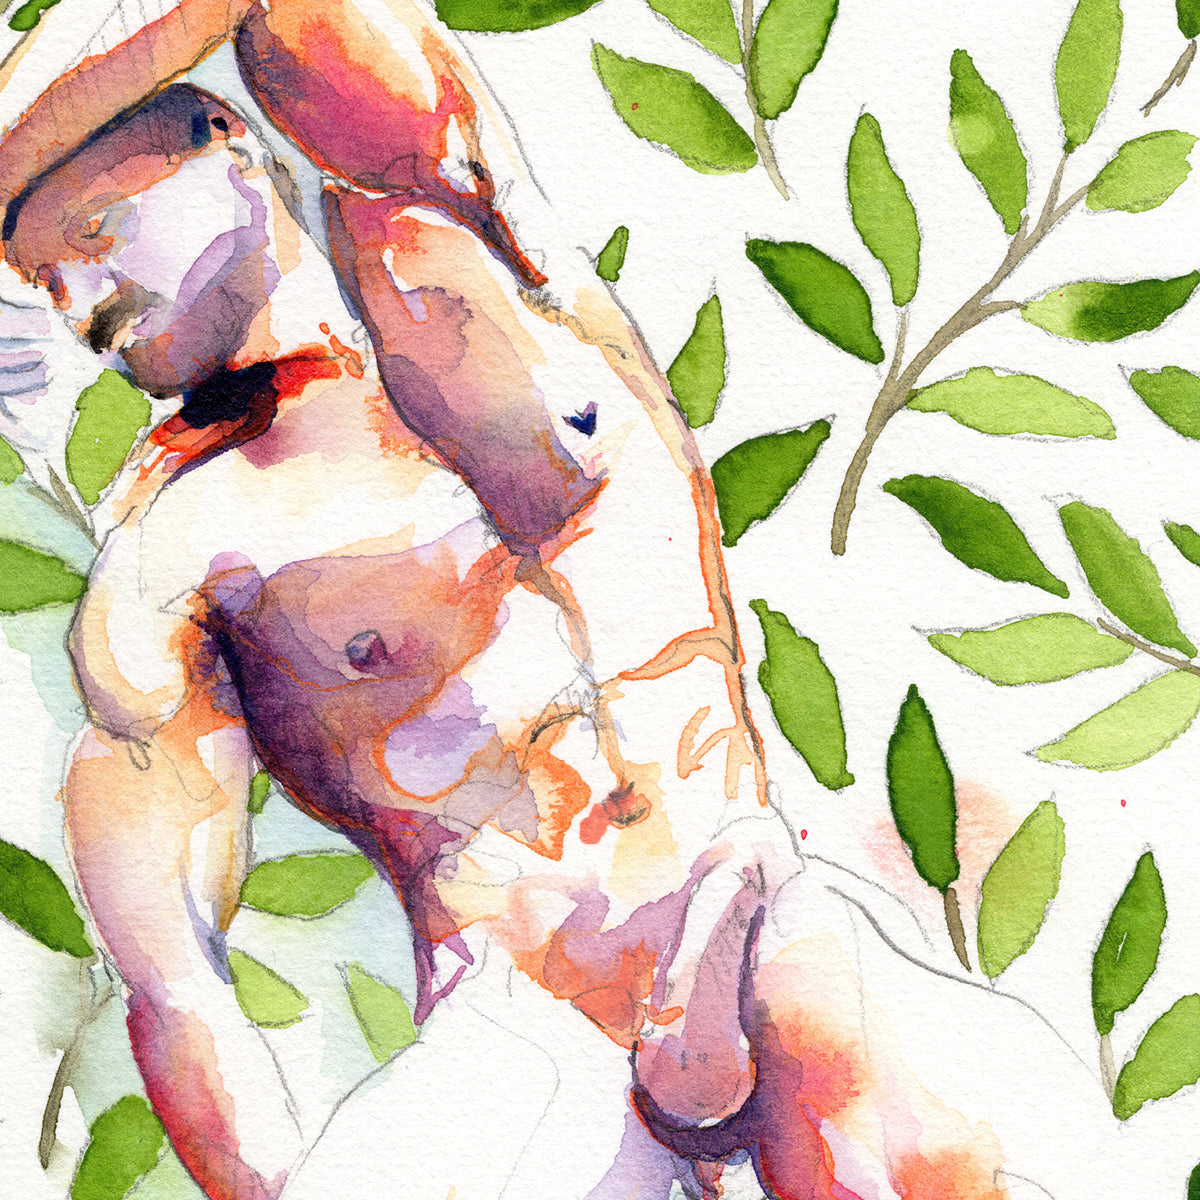 Nude Male Figure Amidst Lush Foliage - 6x9" Original Painting